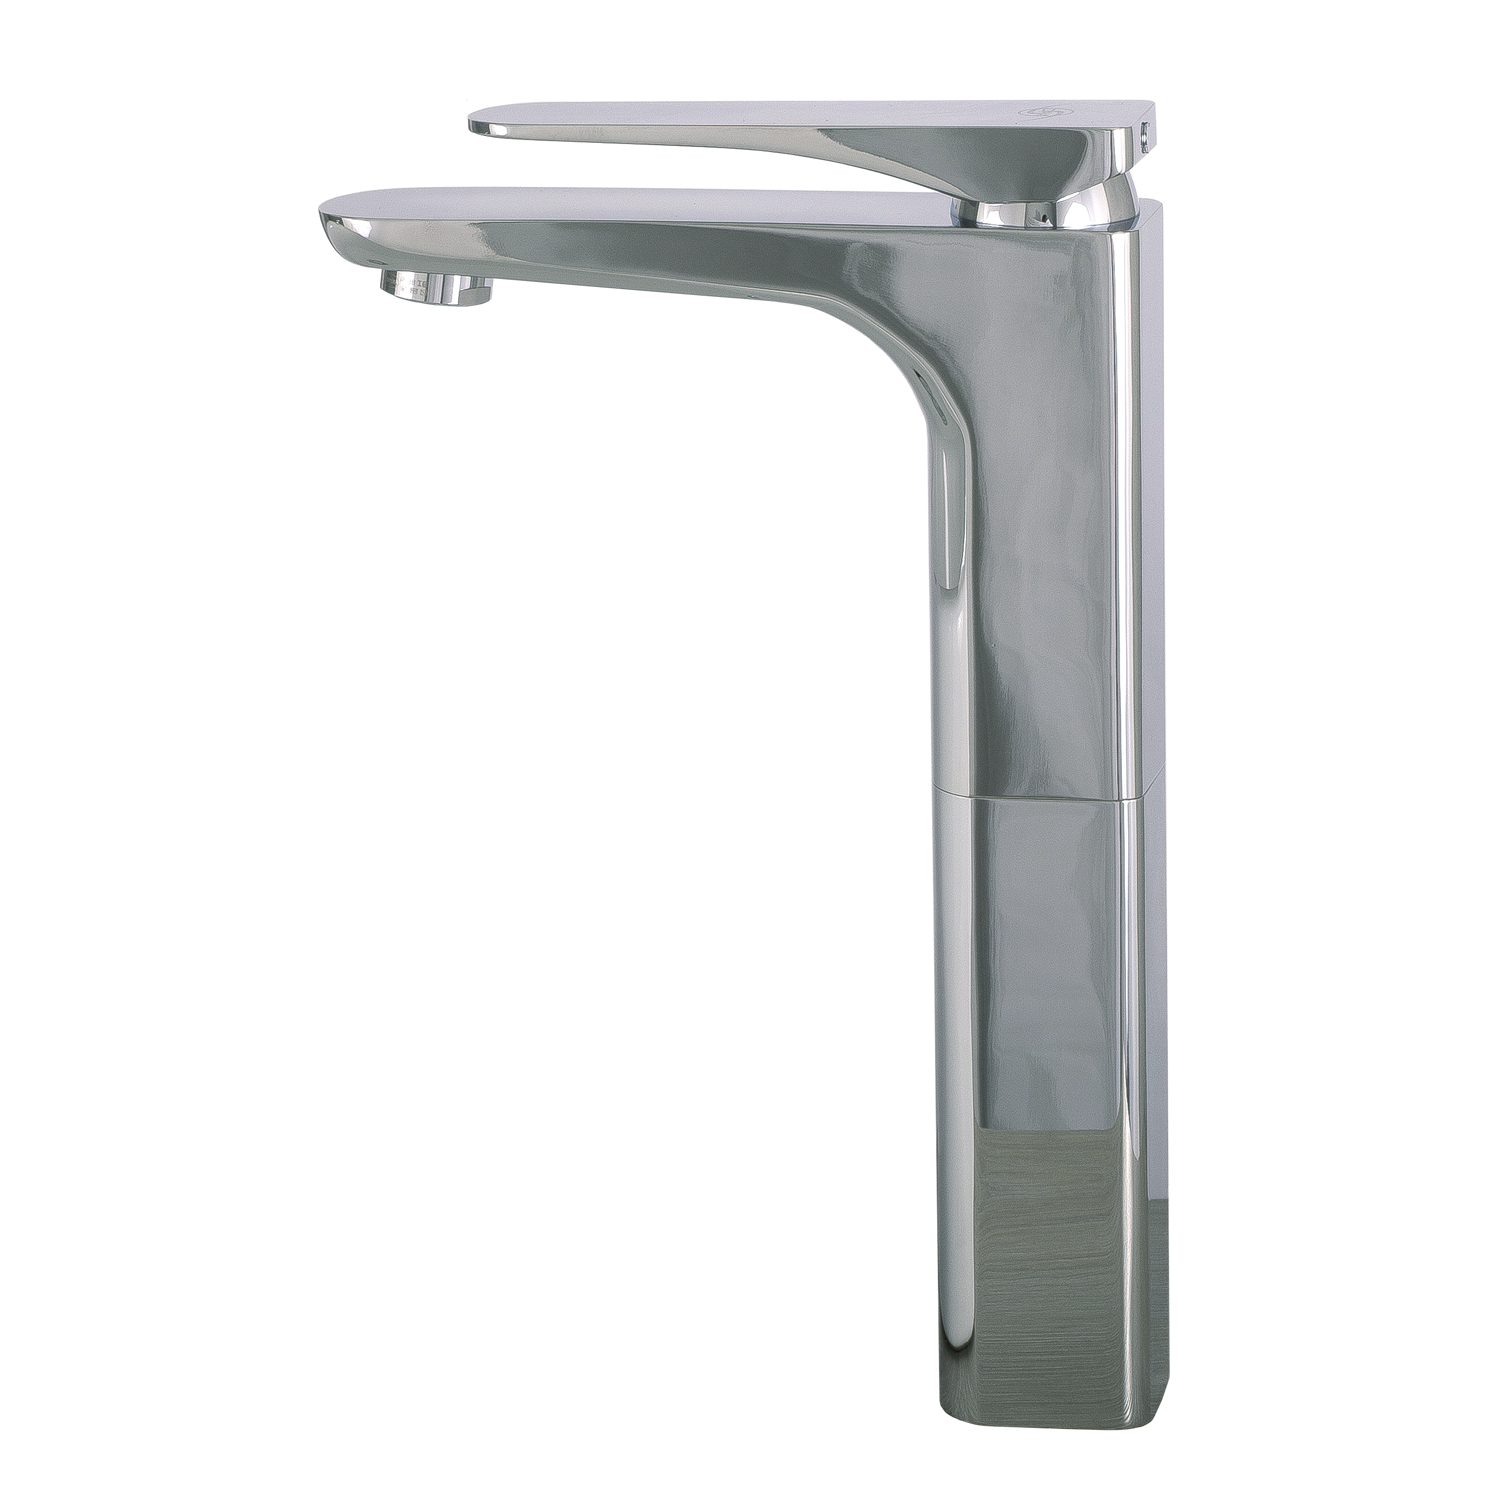 DAX Single Handle Vessel Sink Bathroom Faucet, Brass Body, Chrome Finish, 5-3/16 x 10-15/16 Inches (DAX-805L-CR)